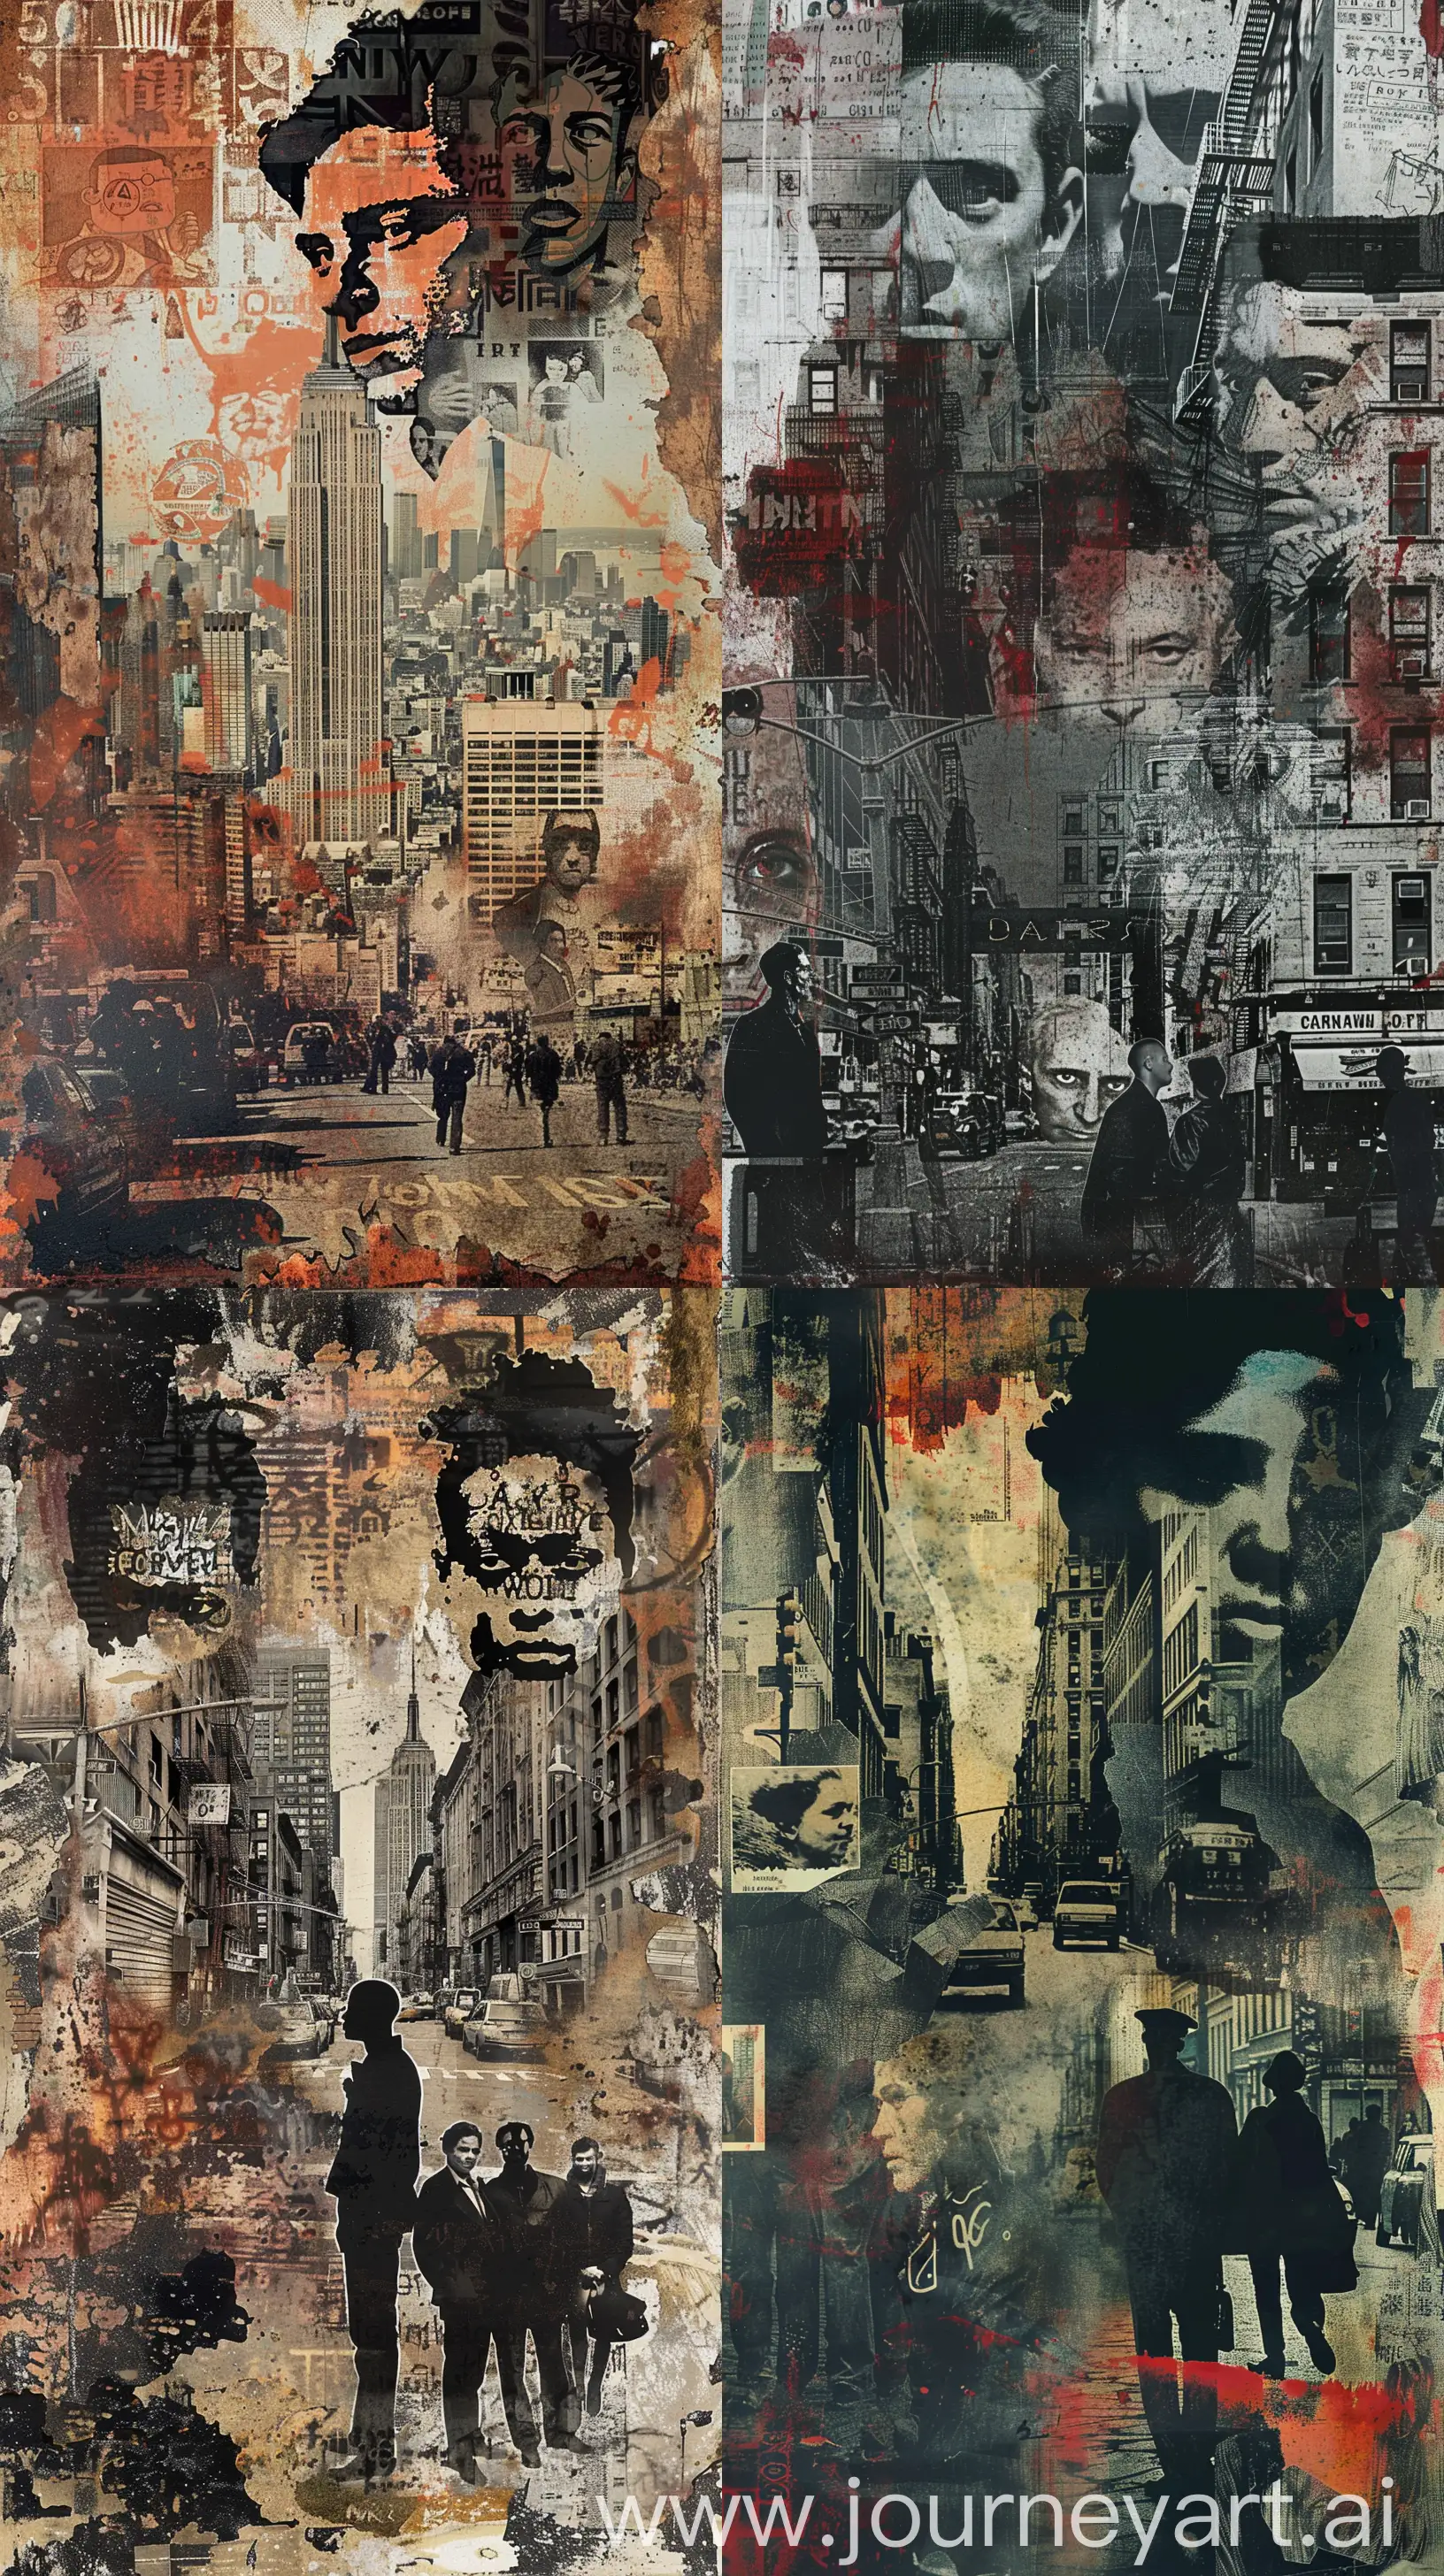 Provocative-Urban-Collage-Wallpaper-Inspired-by-David-Wojnarowicz